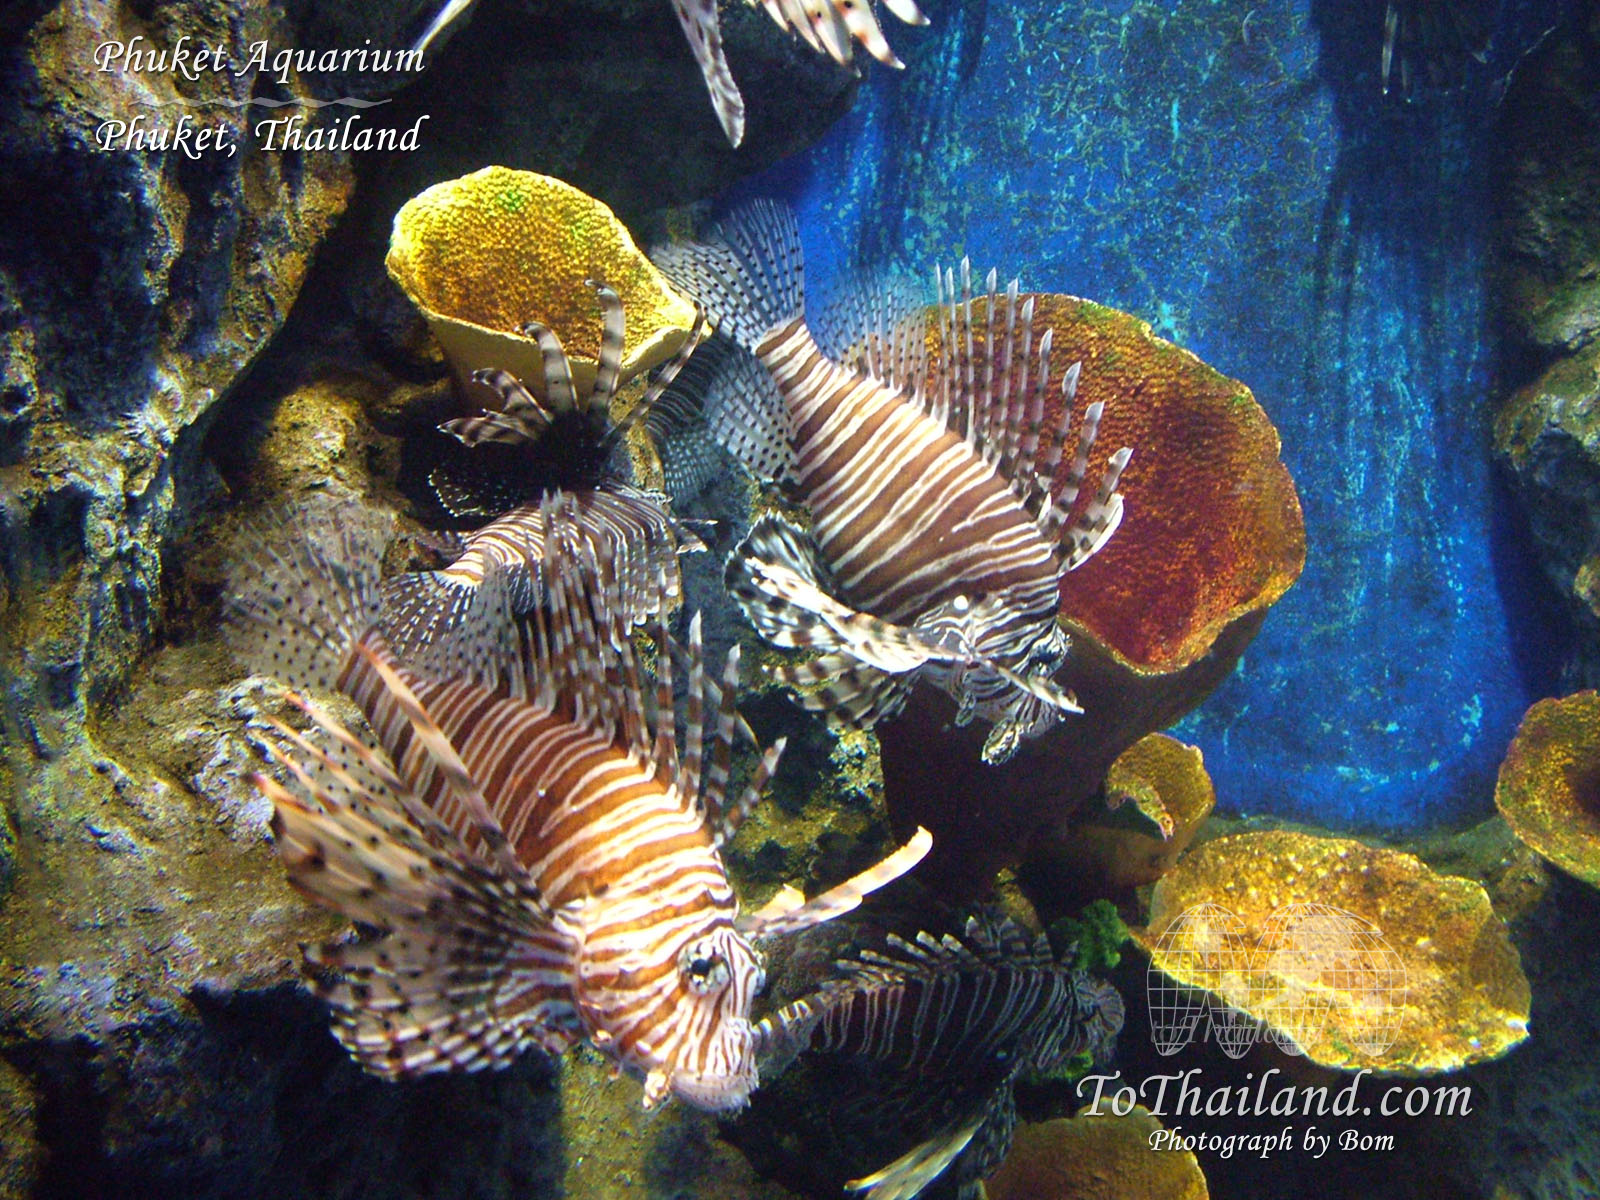 free download marine aquarium screensaver for pc